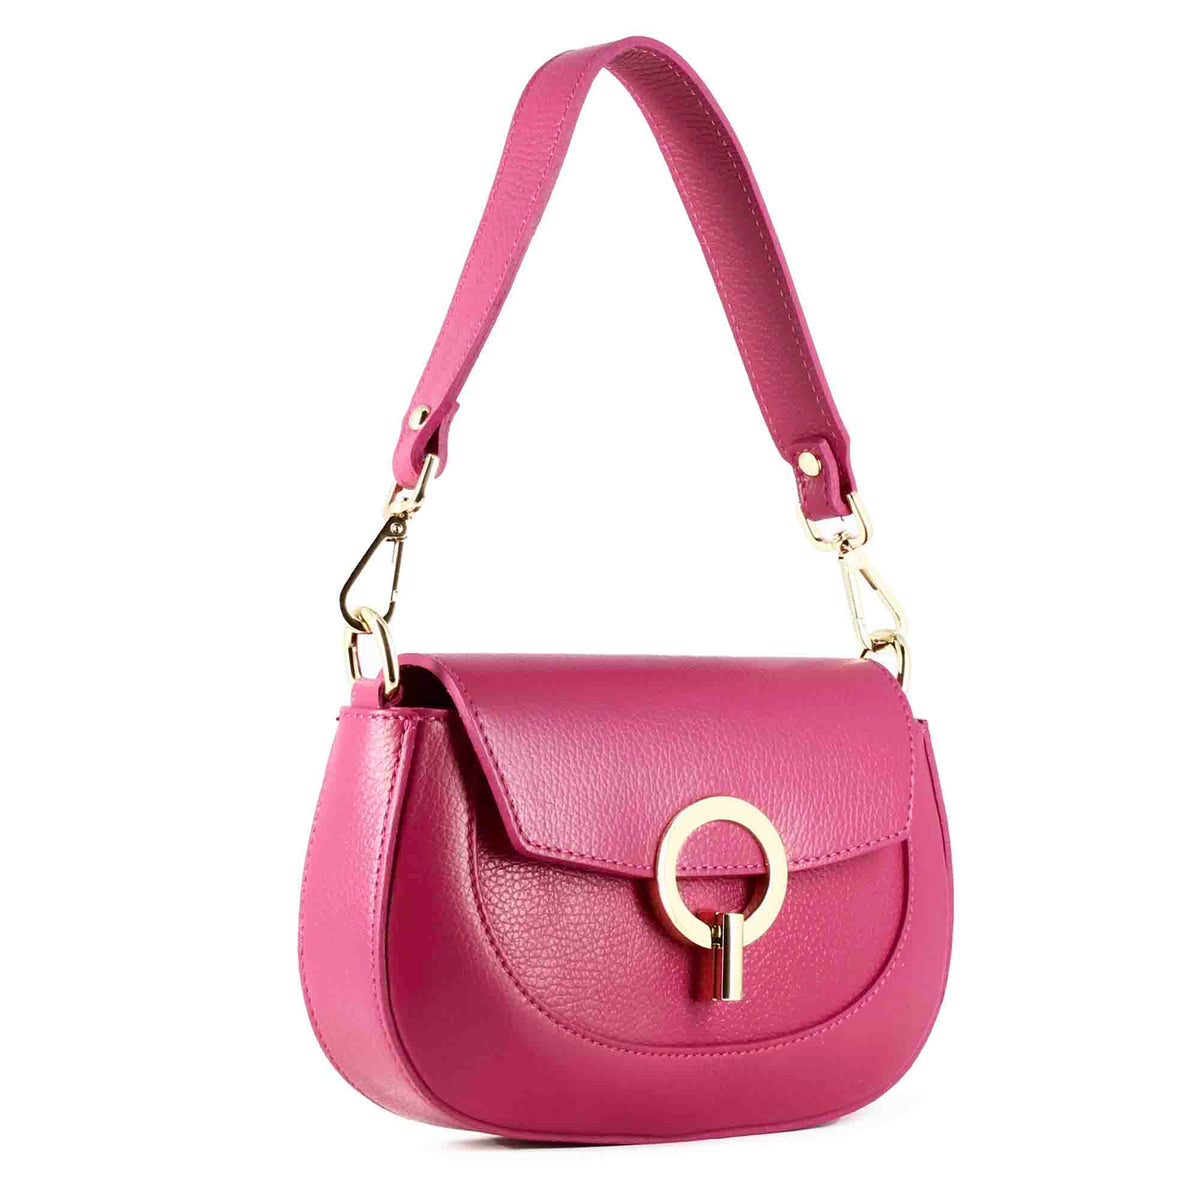 Grace women's pink leather handbag